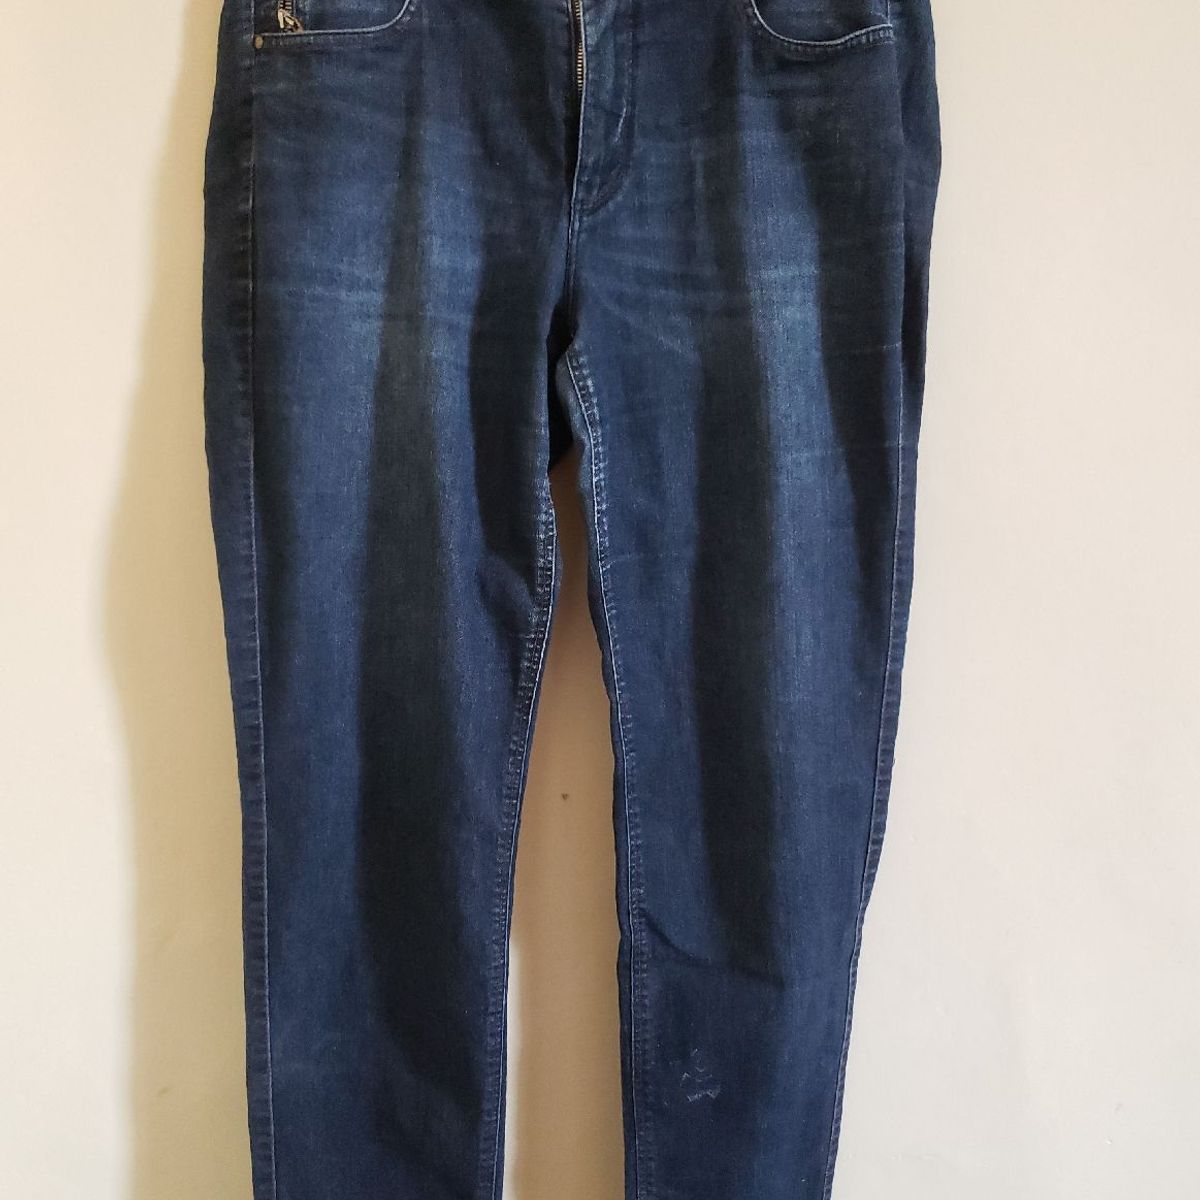 CALÇA COMFY CORDAO - Loony Jeans - Moda Feminina Plus Size e Masculina -  Compre Online